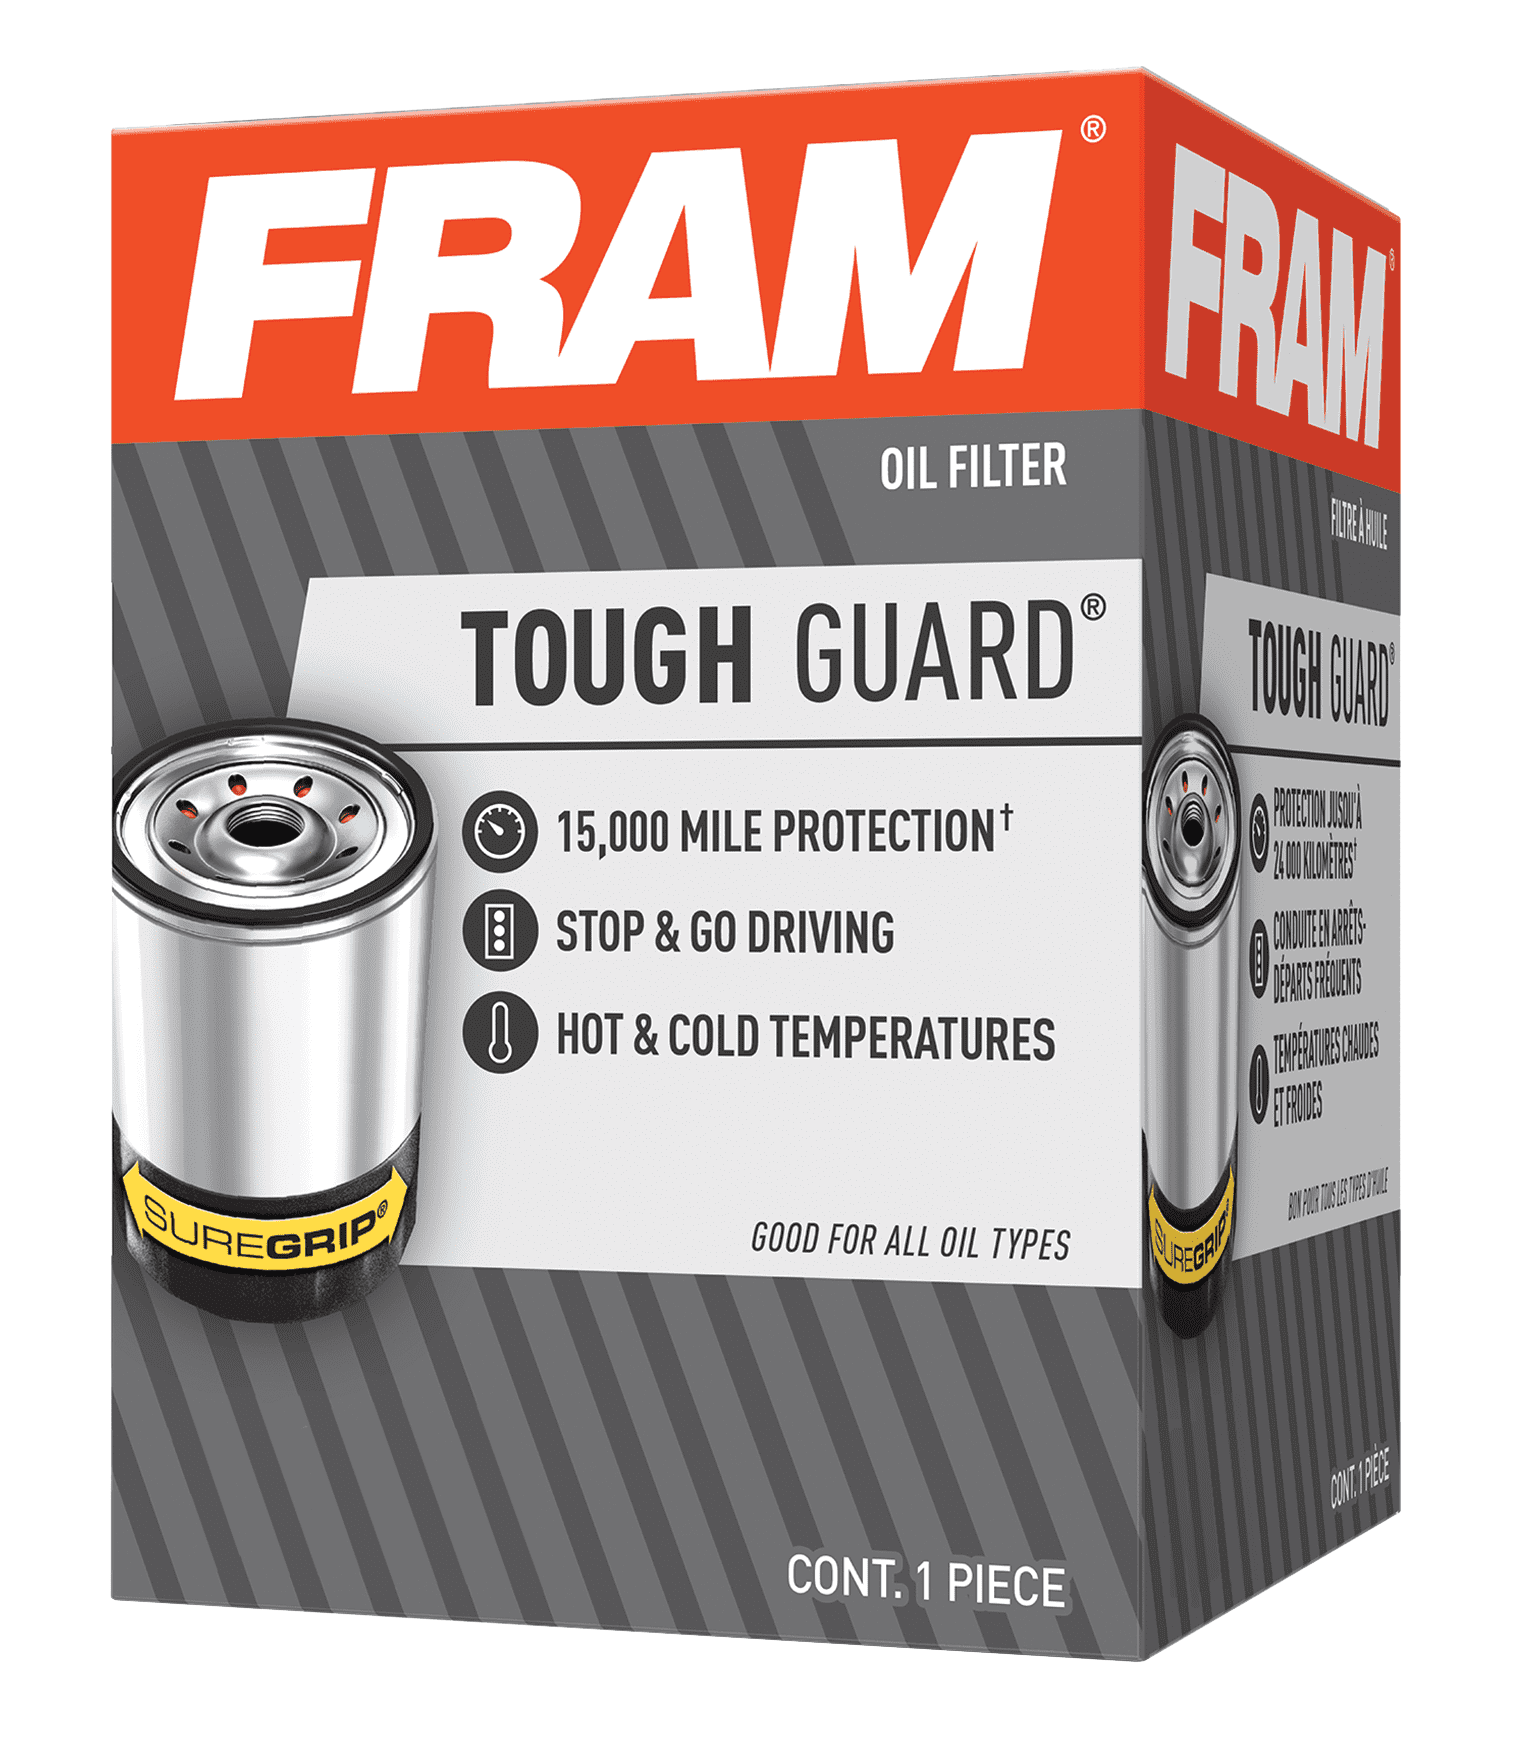 FRAM TG9100-1 Tough Guard Oil Filter